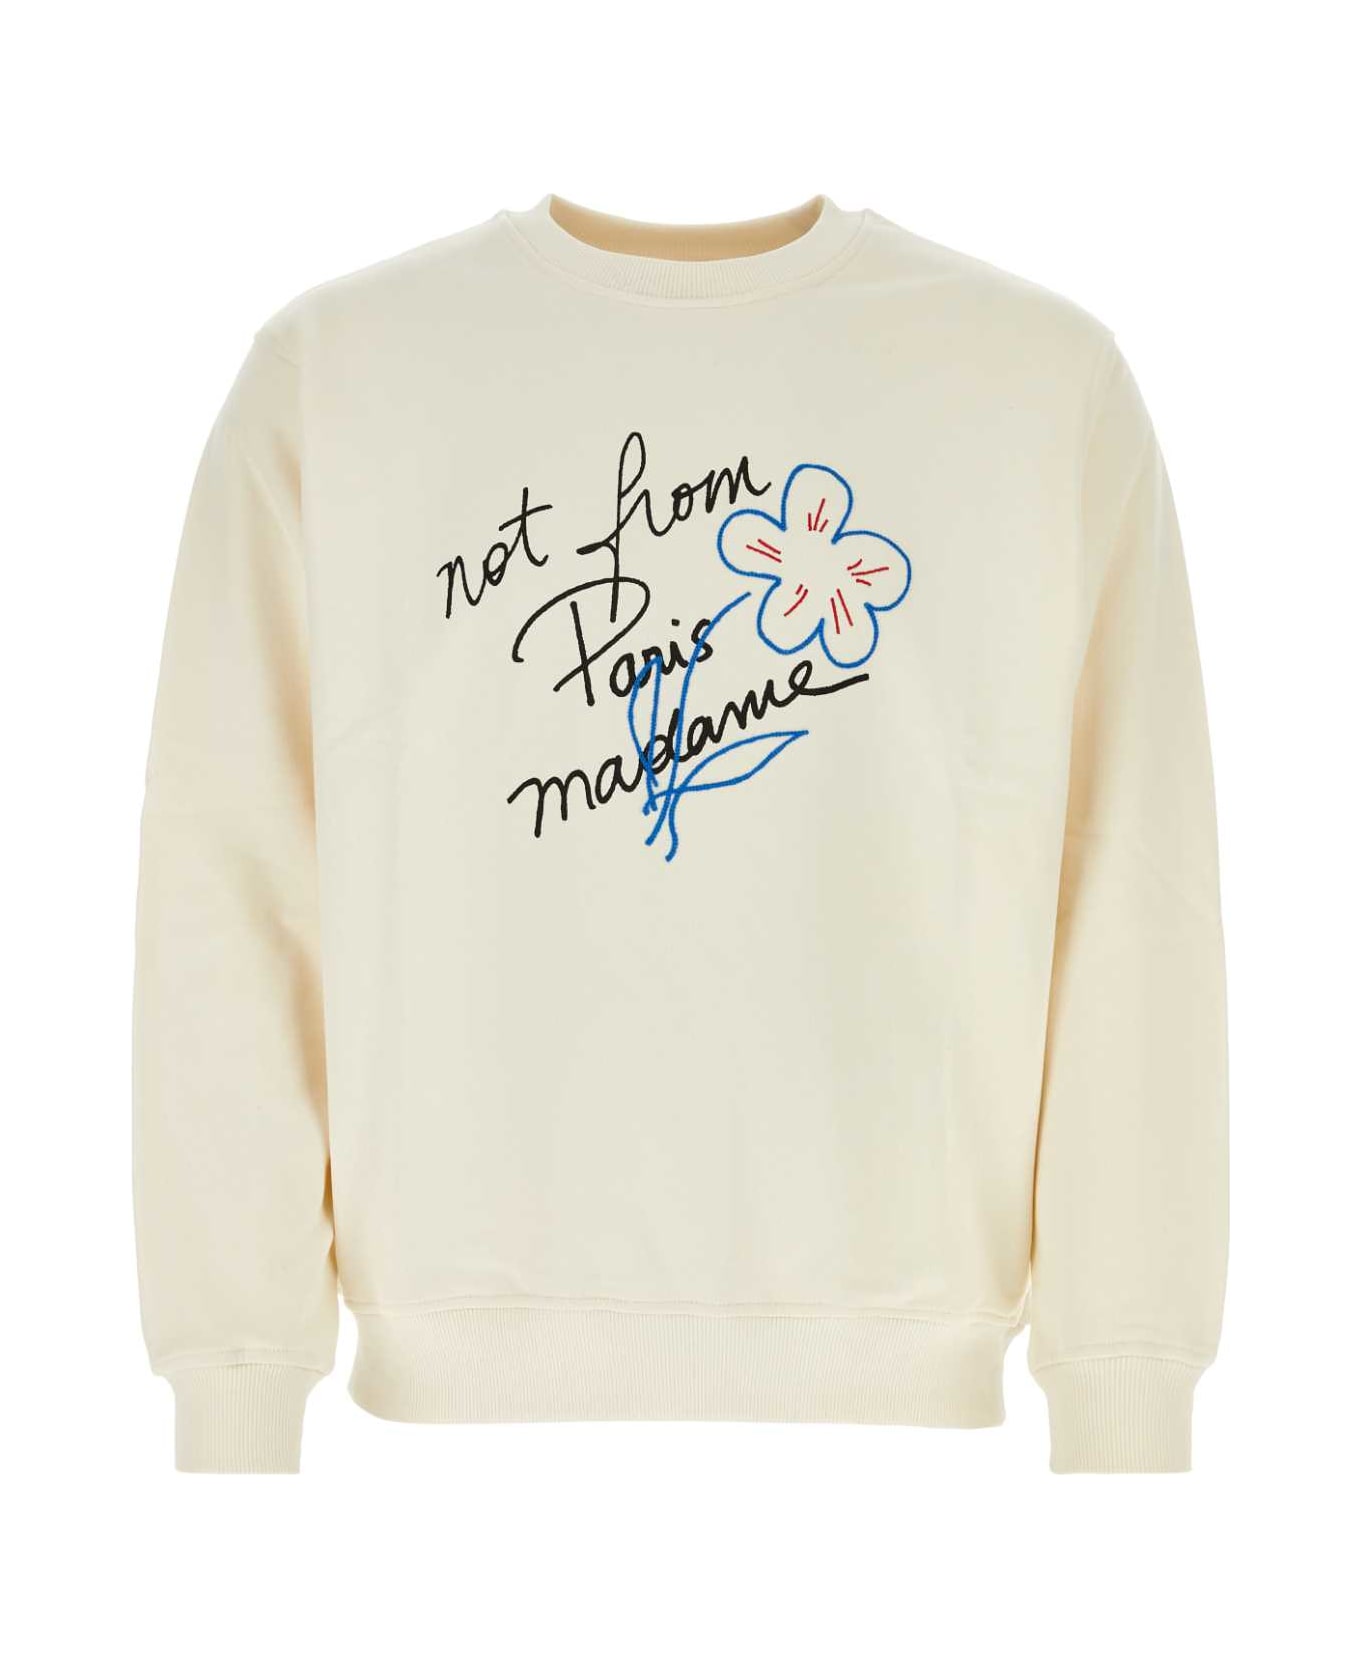 Drôle de Monsieur Cream Cotton Slogan Esquisse Sweatshirt - CREAM